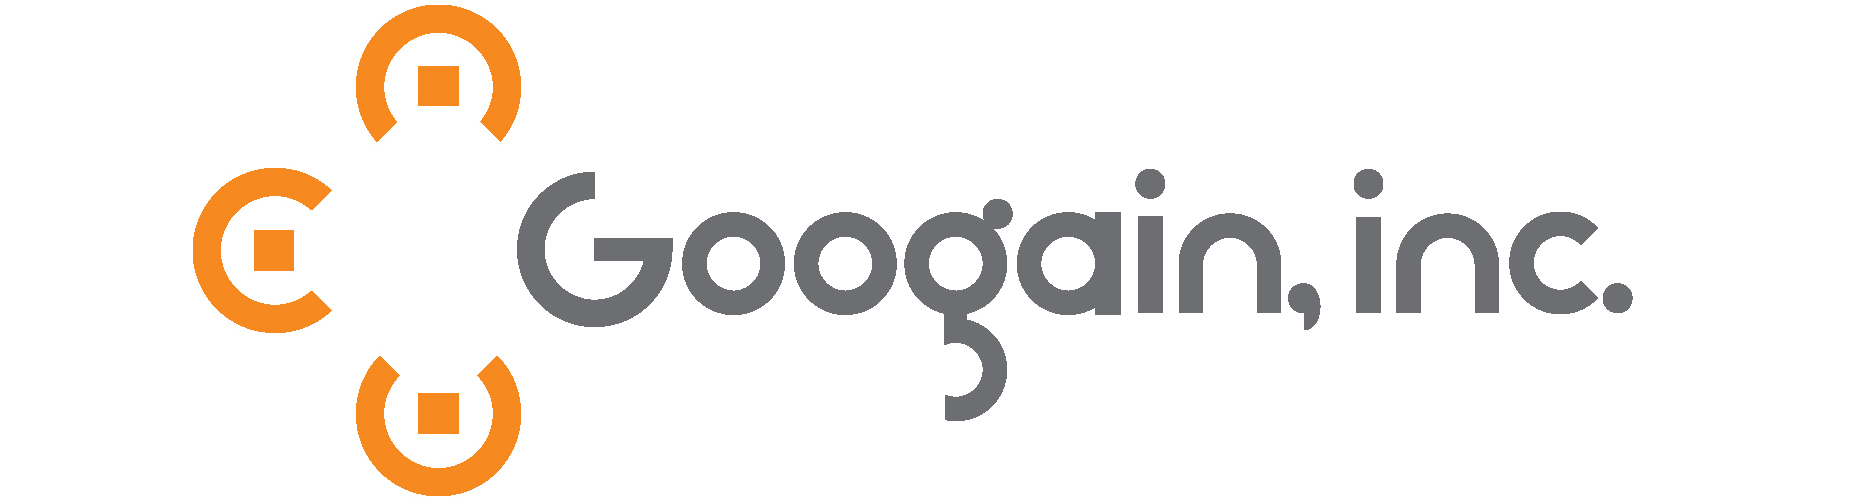 Googain_Logo_1850x500-2.png